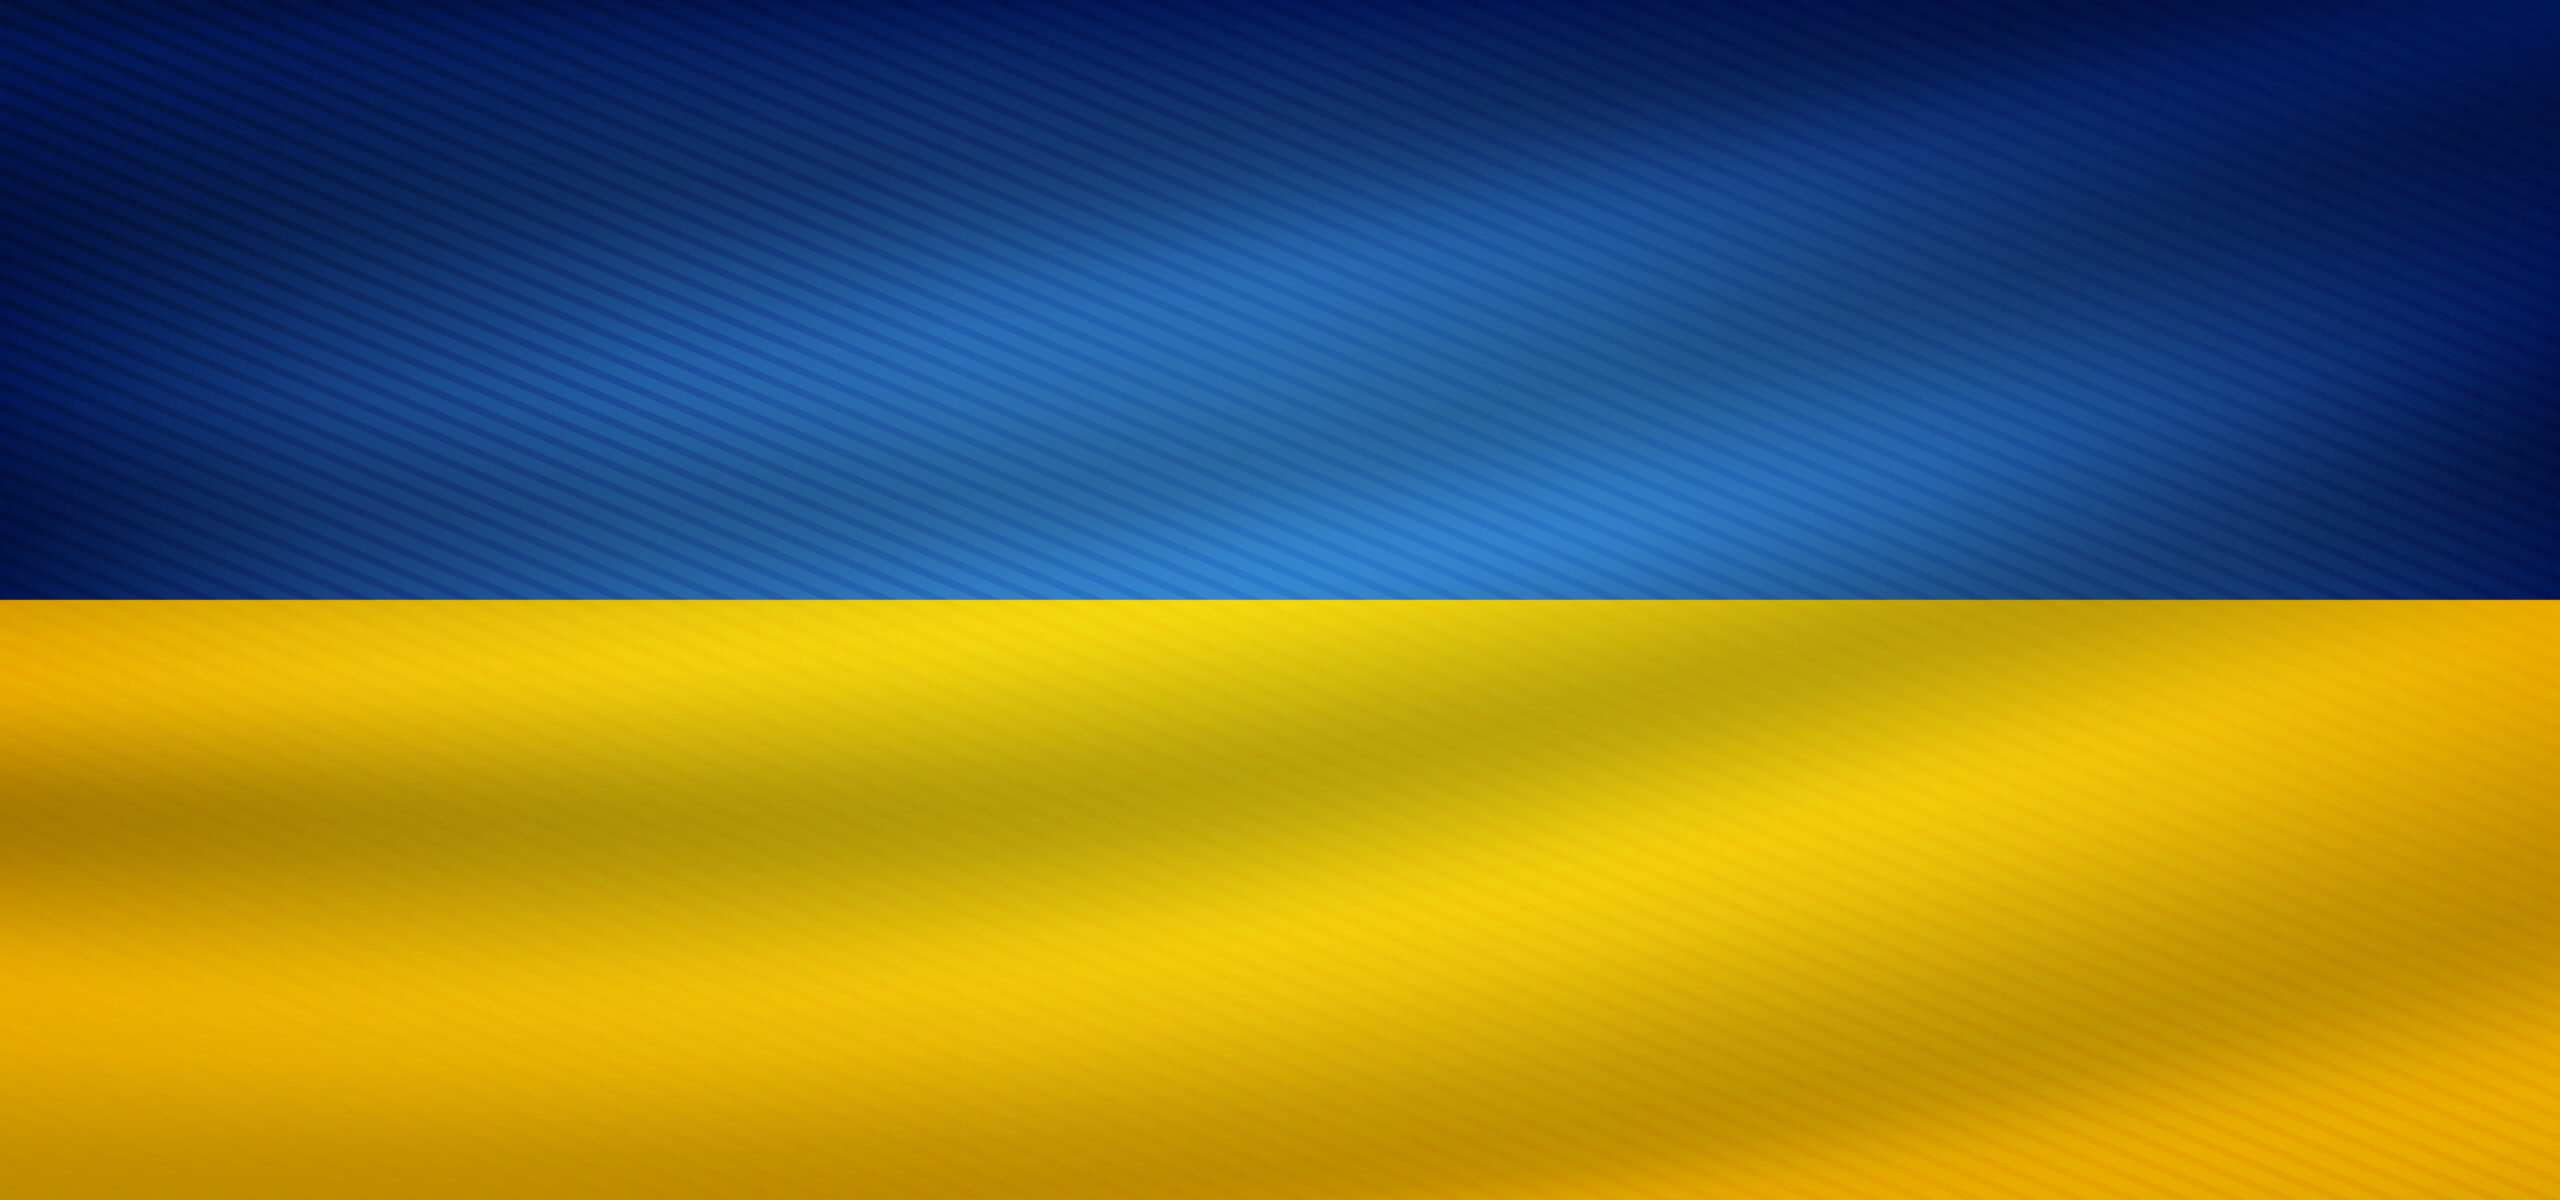 ukraine flag grunge fabric texture